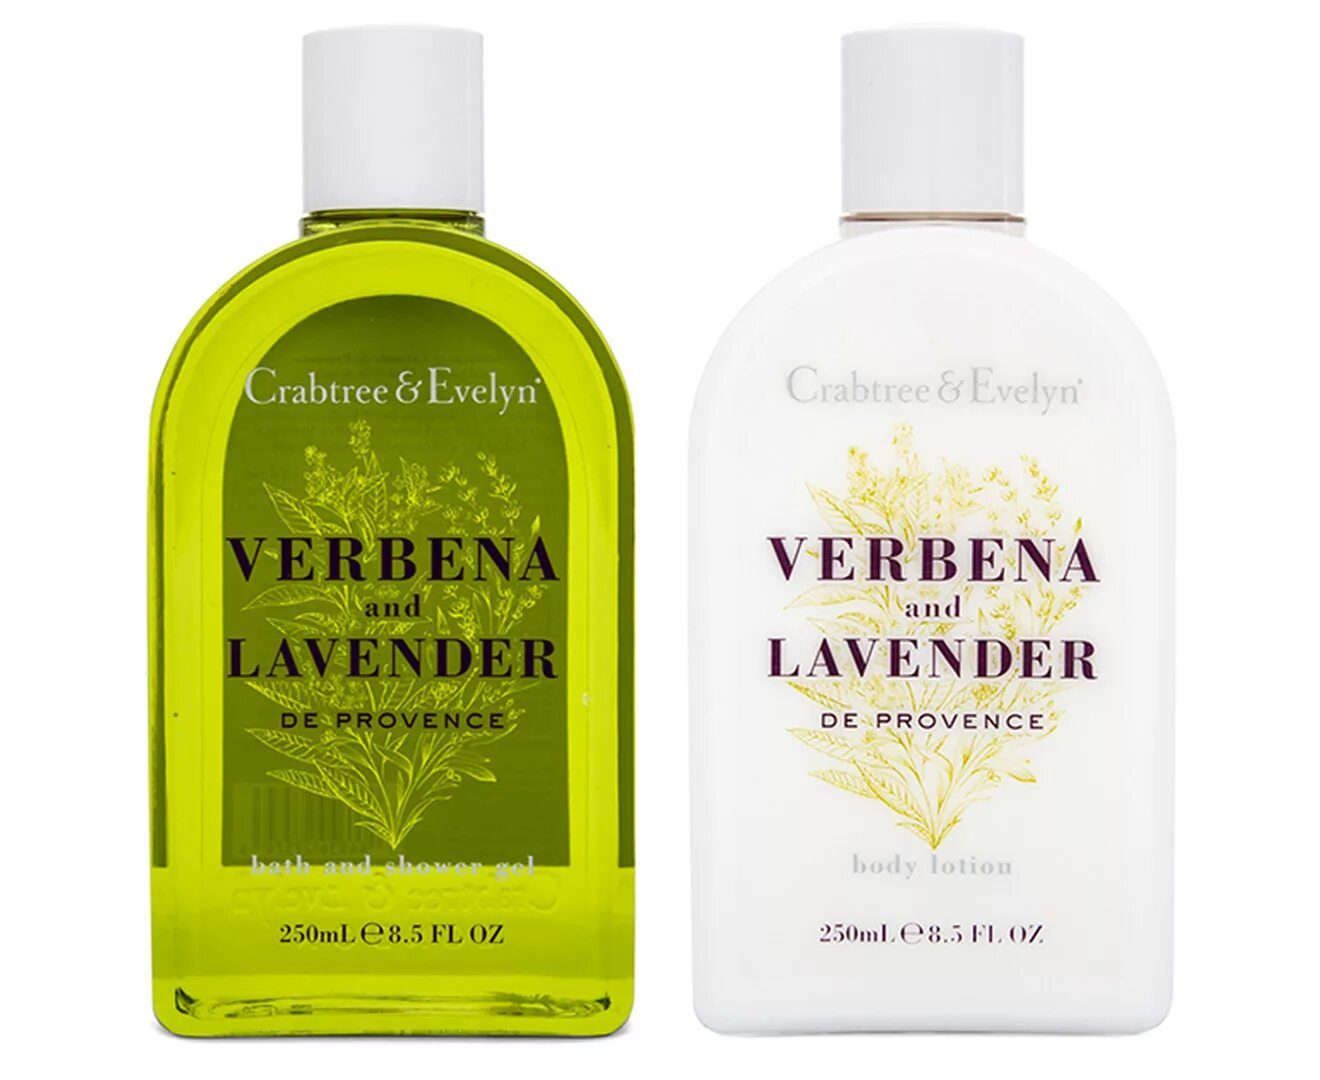 Вербена магазин. Crabtree Evelyn Verbena Lavender. Crabtree & Evelyn Verbena and Lavender body Lotion (250ml). Verbena Lavender шампунь. Verbena and Lavender de Provence.